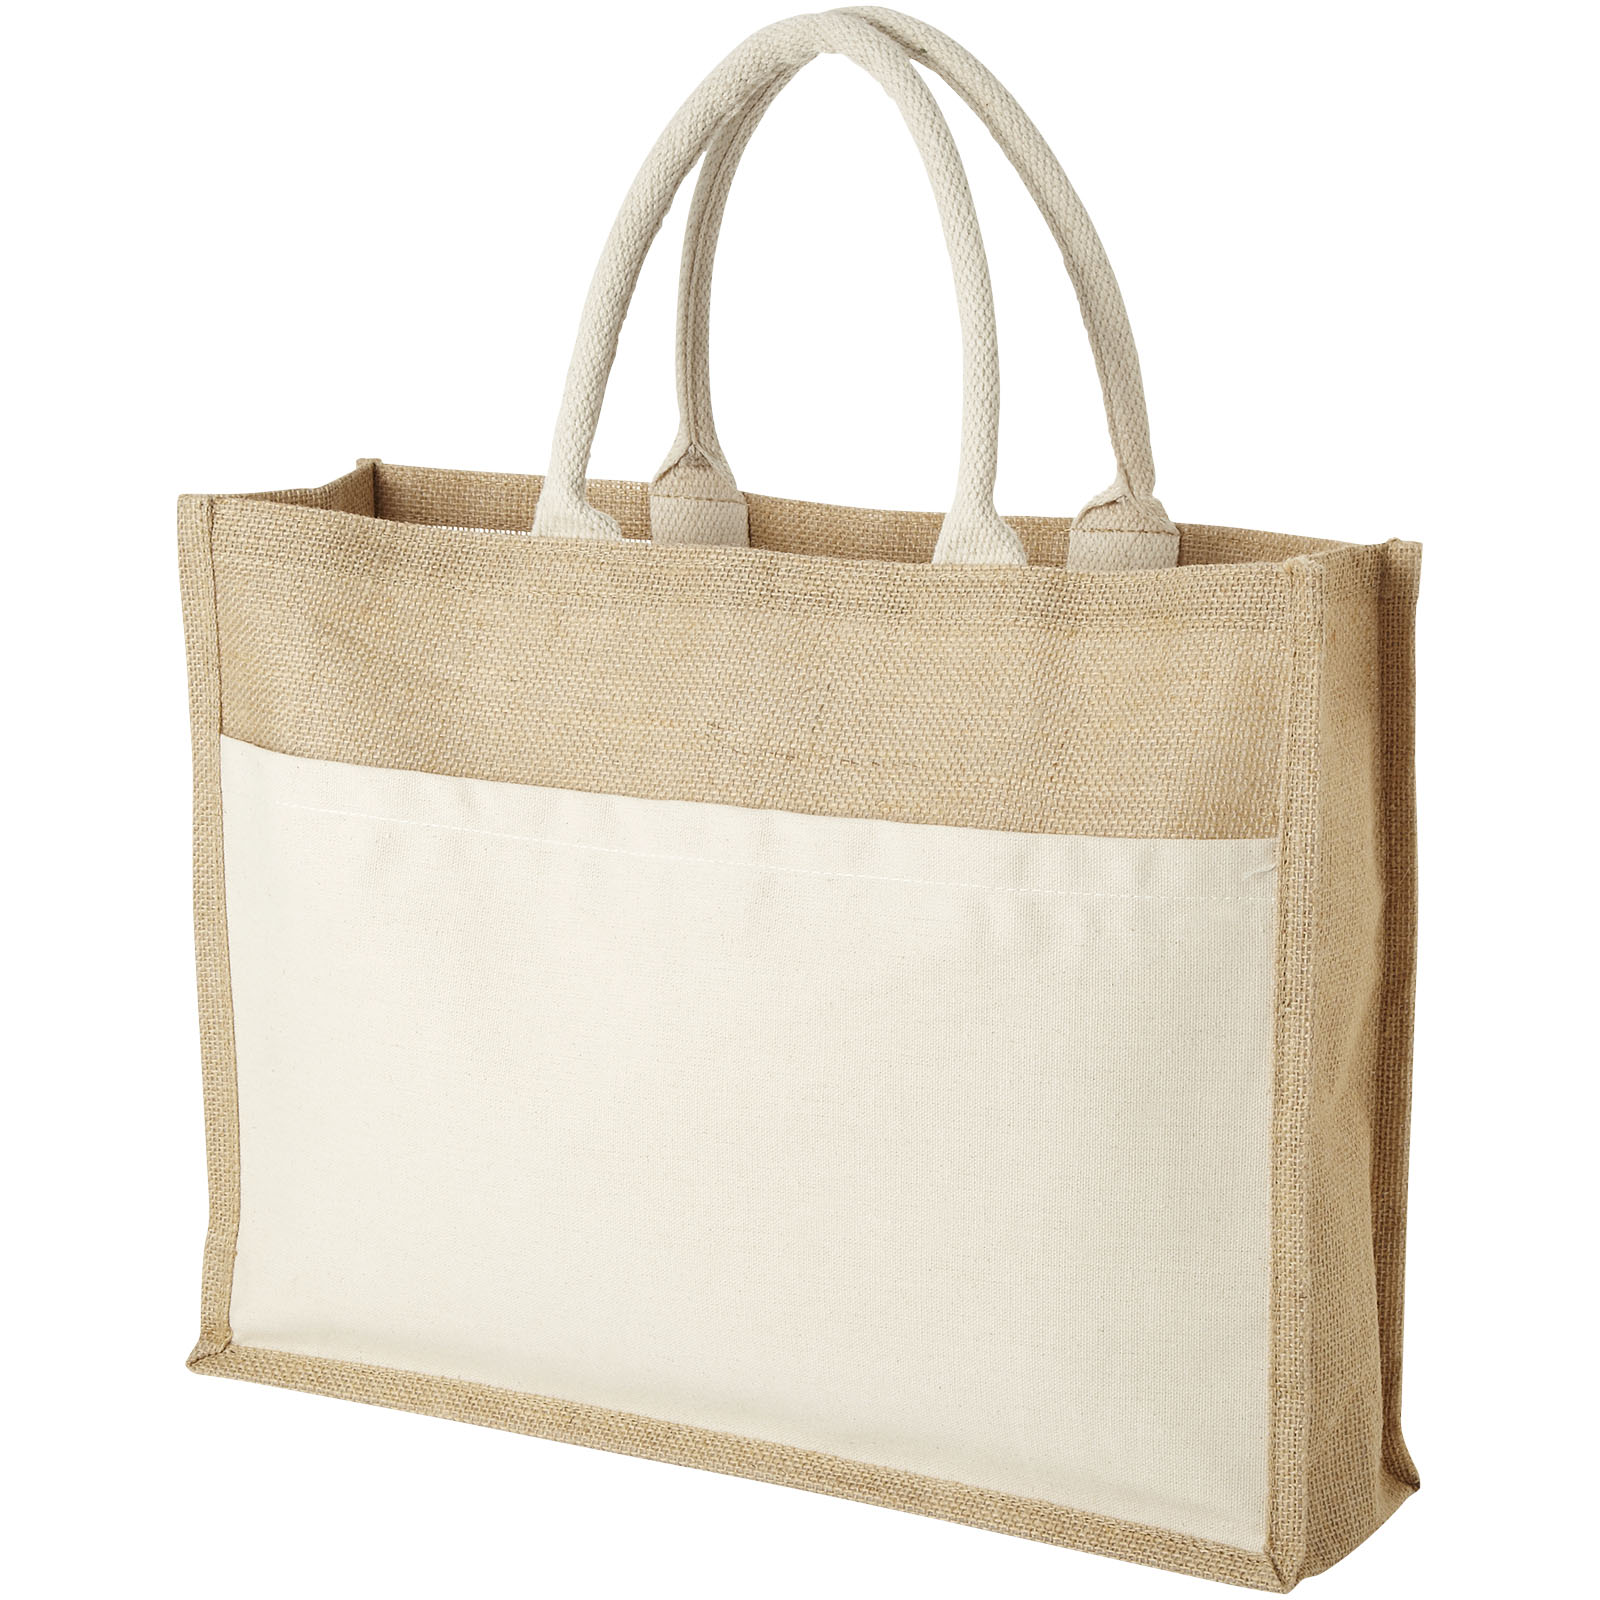 Bags - Mumbay cotton pocket jute tote bag 18L